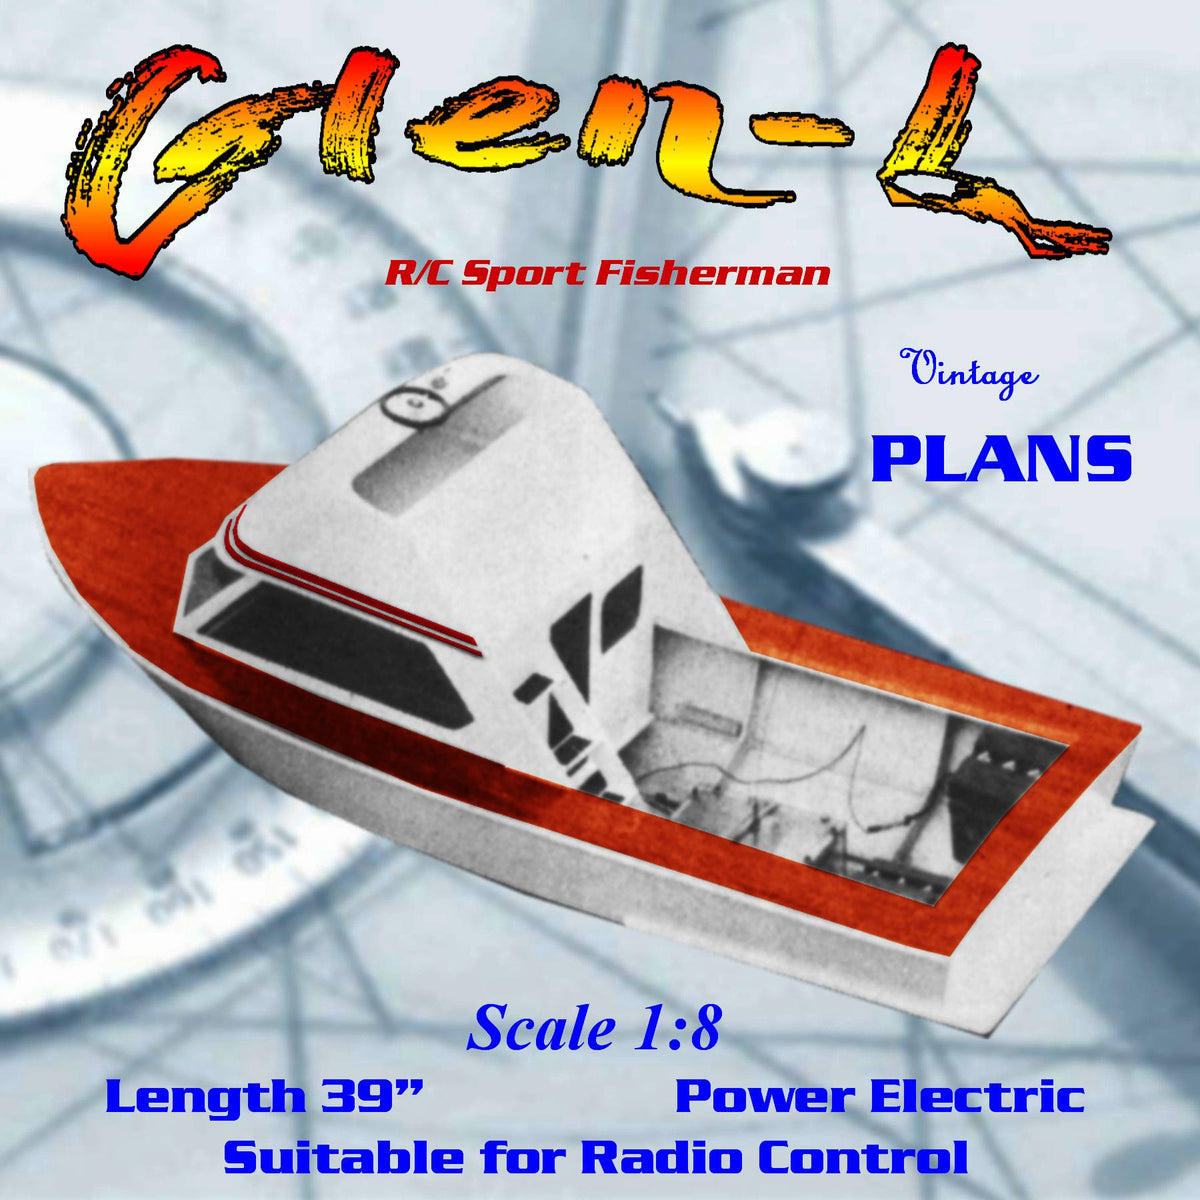 Build a 1/8 Scale R/C Glen-L Sport Fisherman Full size printed plans & –  Vintage Model Plans